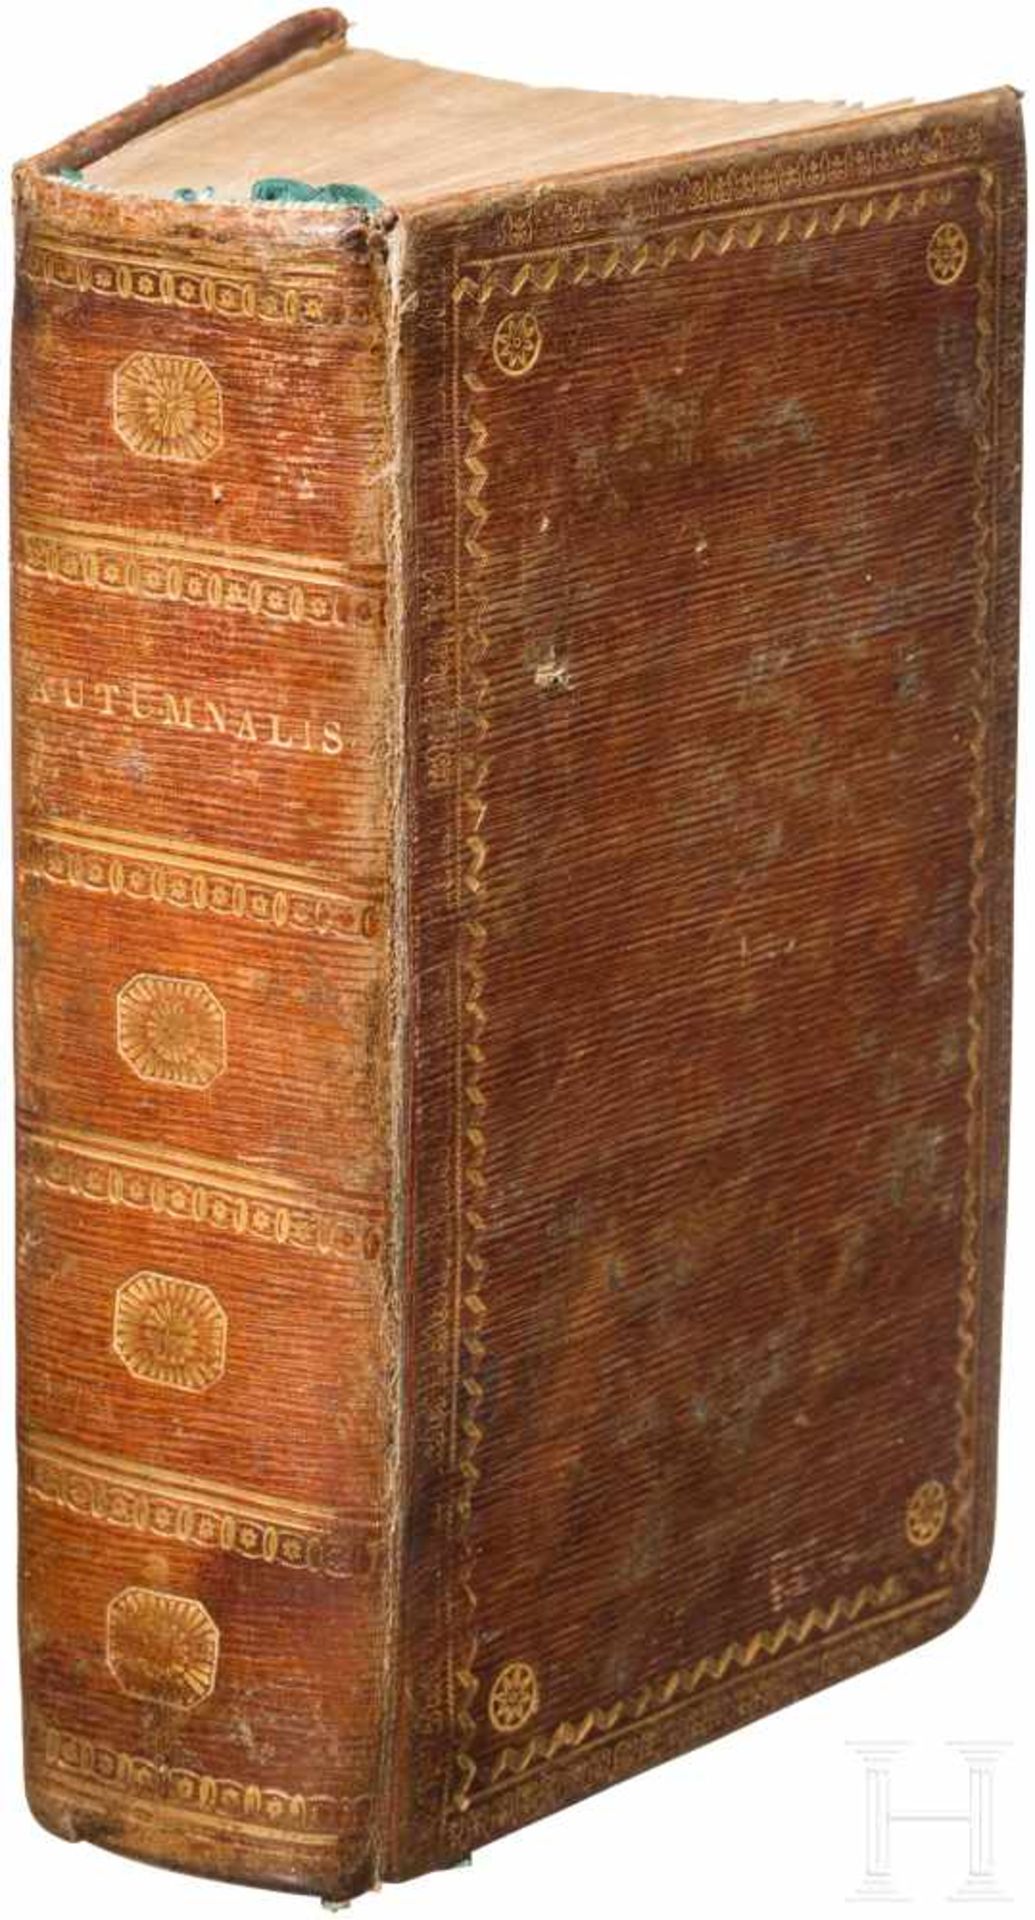 "Breviarium Romanum", Neapel, datiert 1805272 S., plus Anhang. Zweifarbiges Titelkupfer,